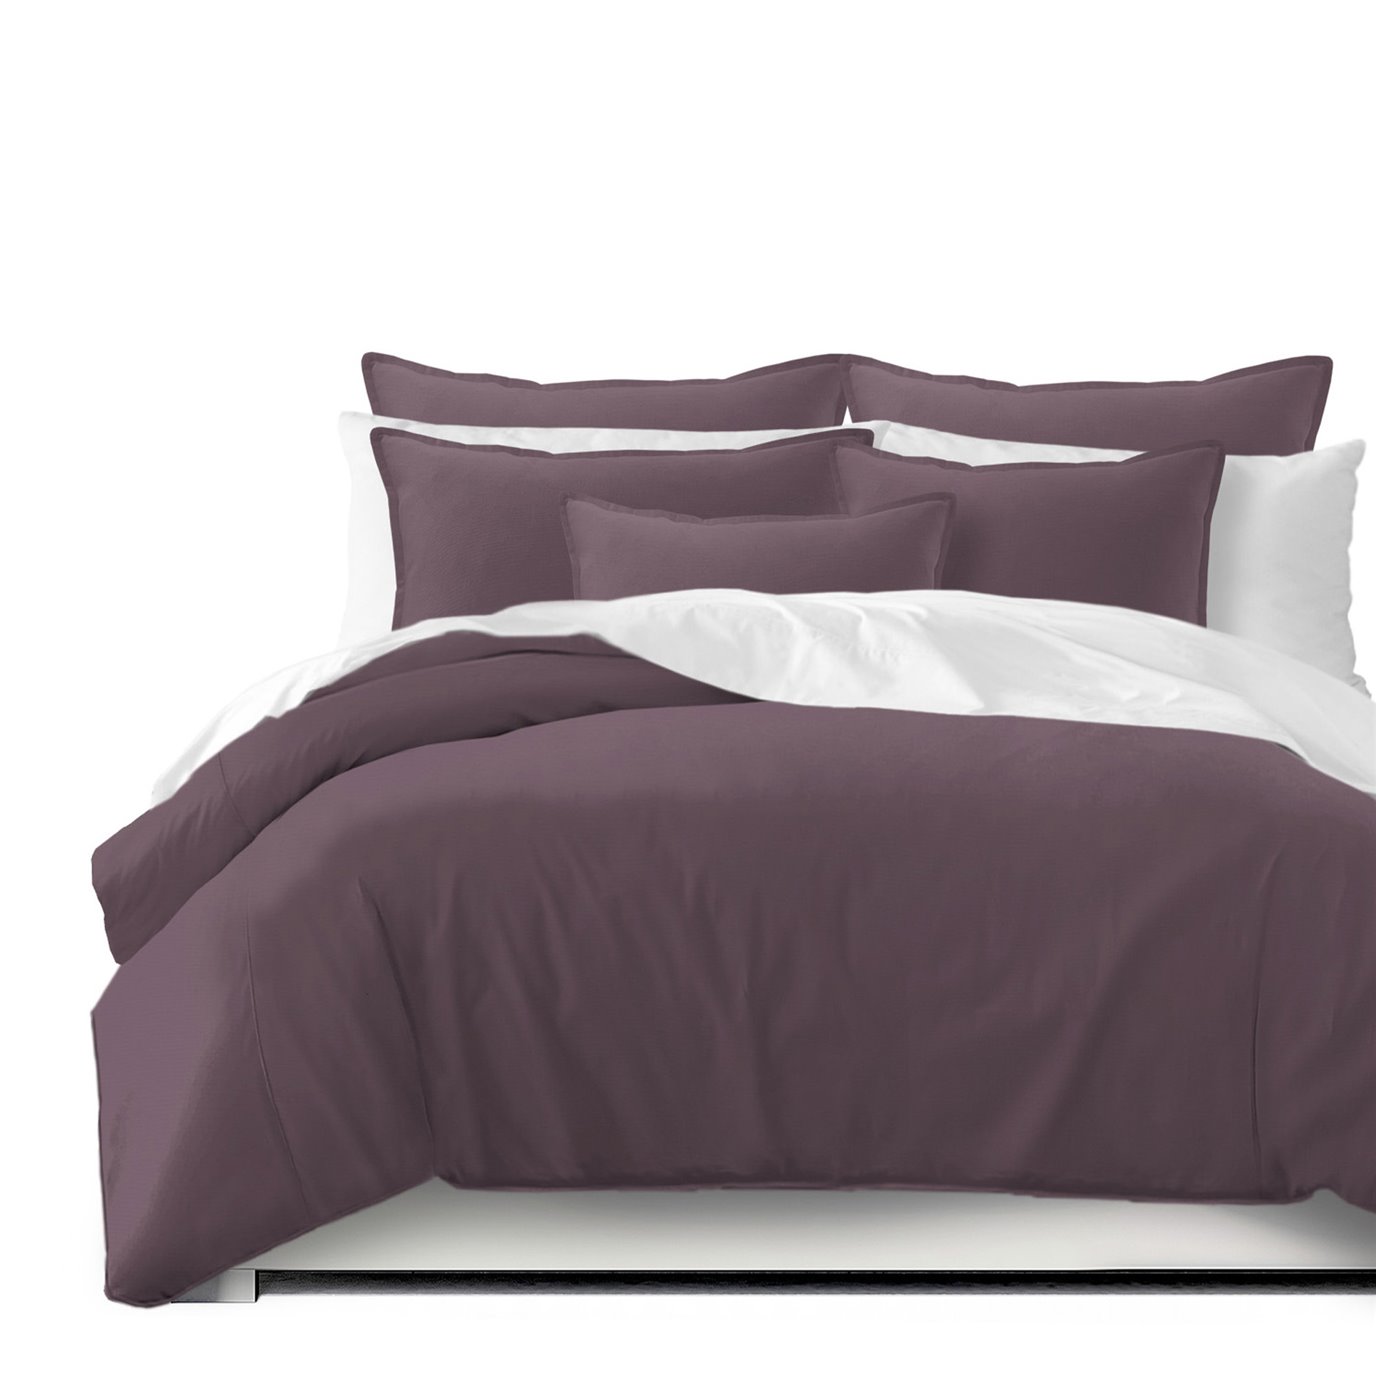 Braxton Purple Grape Duvet Cover and Pillow Sham(s) Set - Size King / California King